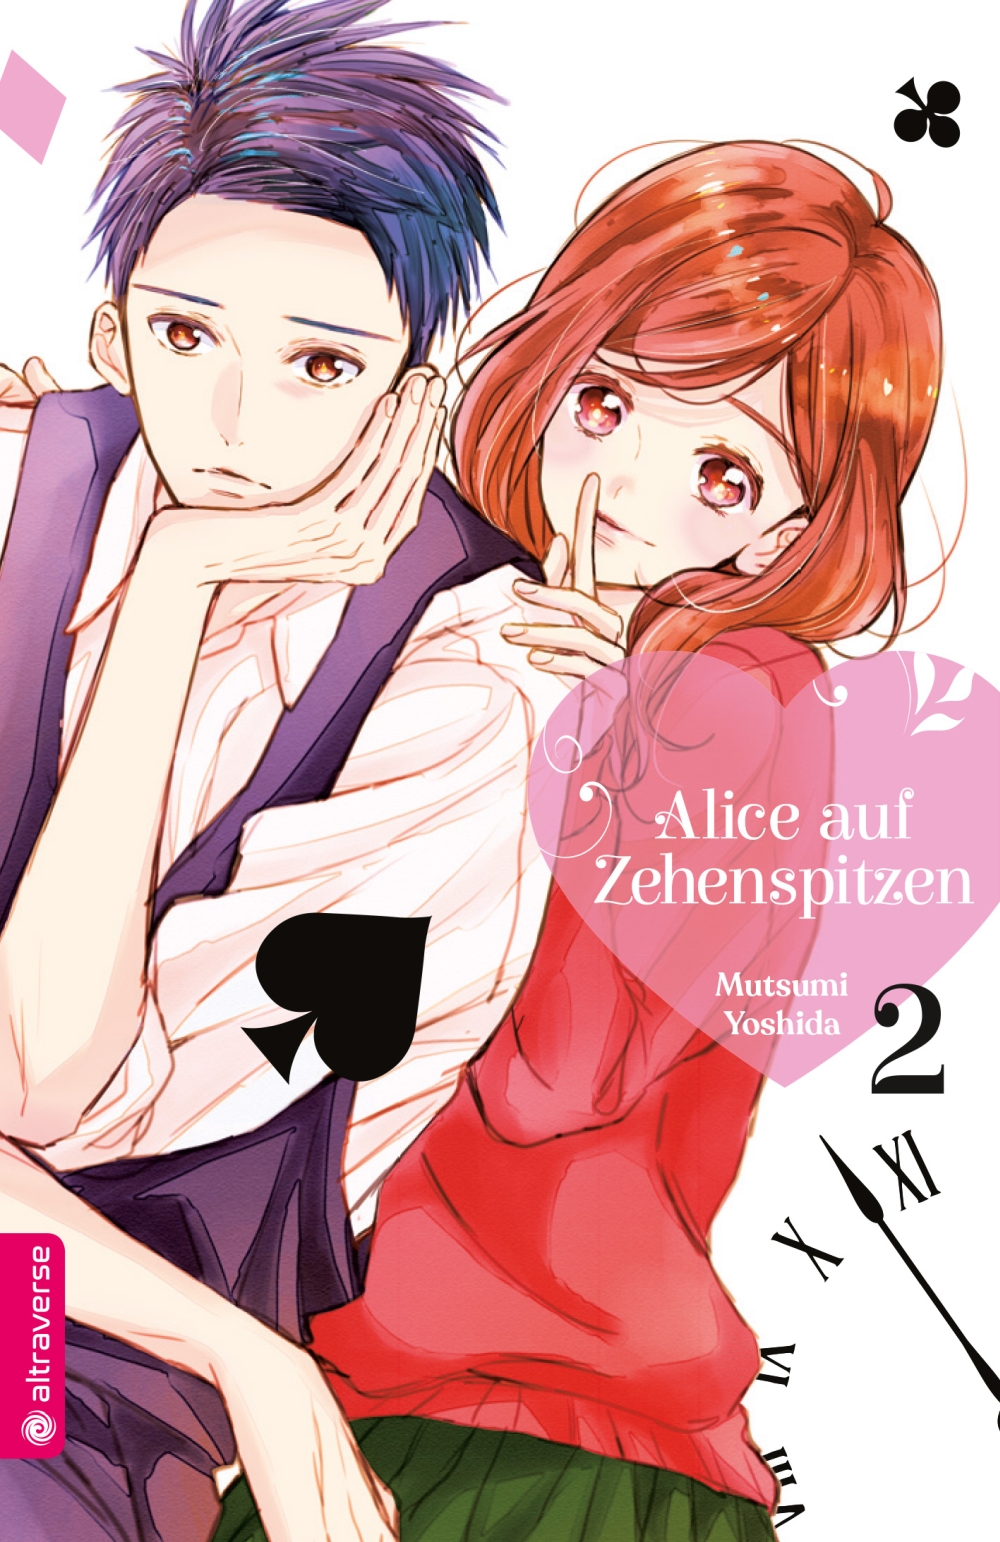 Alice auf Zehenspitzen 2 Manga (New)